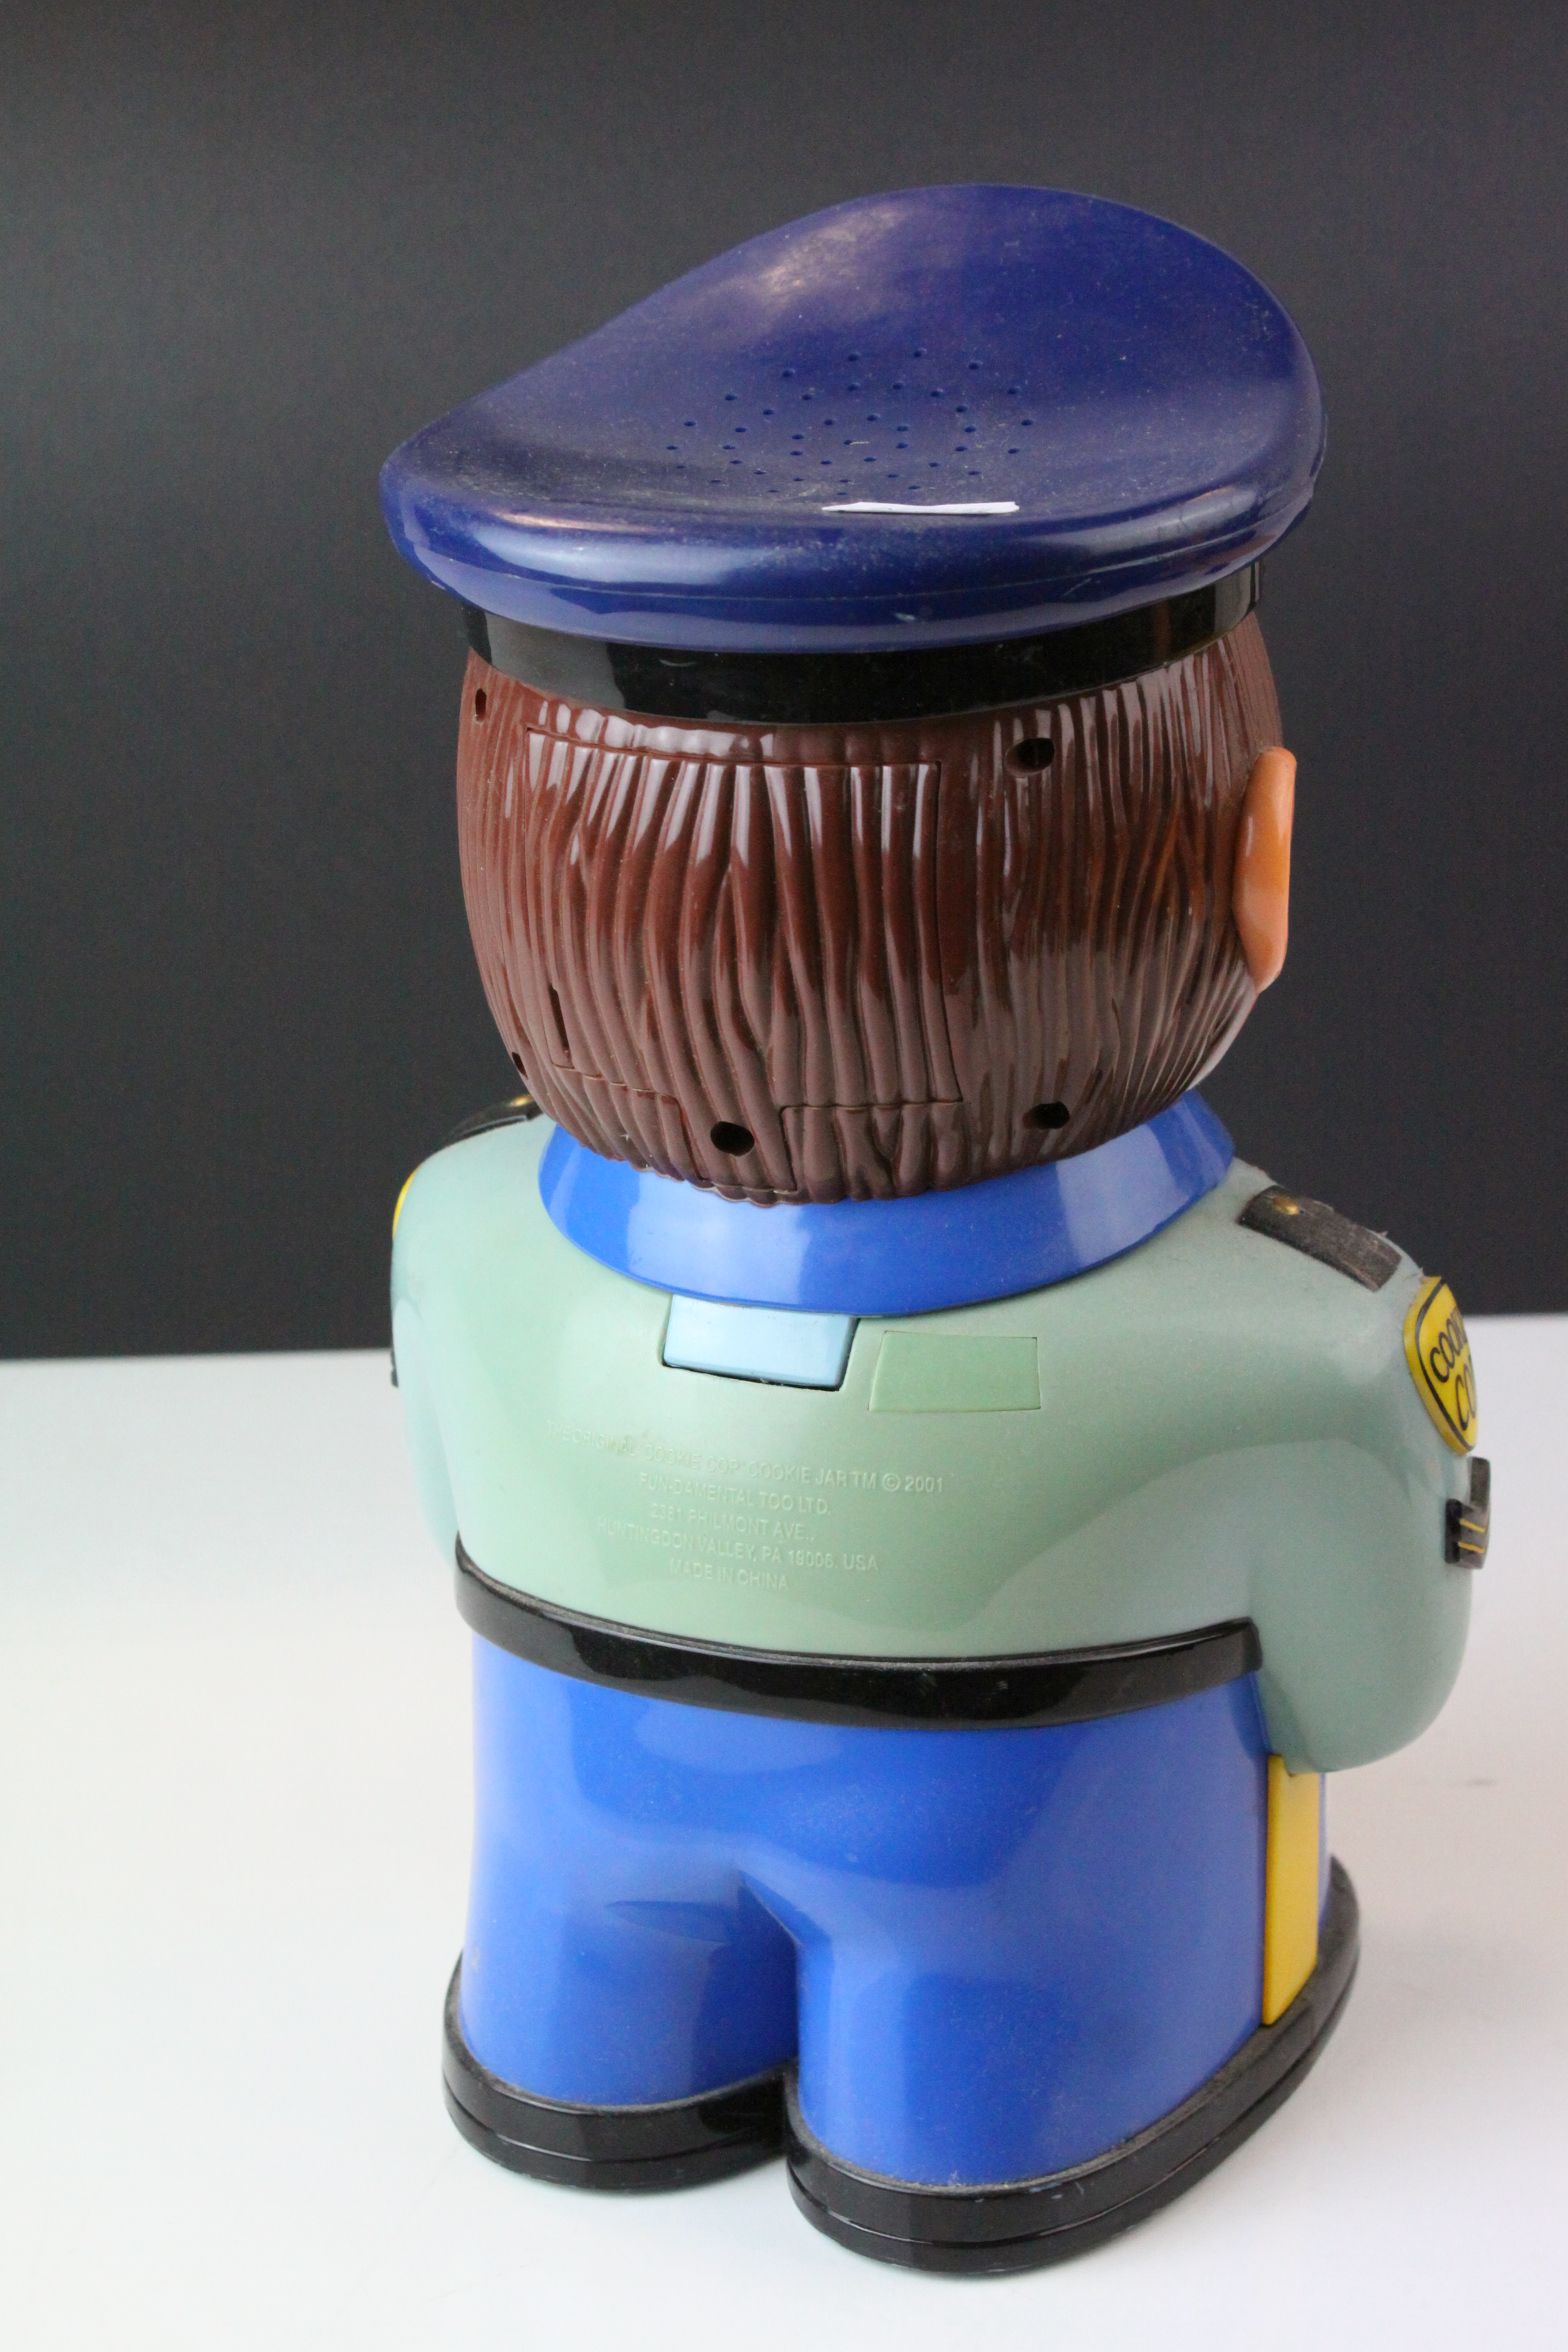 American Novelty Plastic ' The Original ' Cookie Cop ' Cookie Jar ' made by Fun-damnetal Too Ltd, - Image 4 of 6